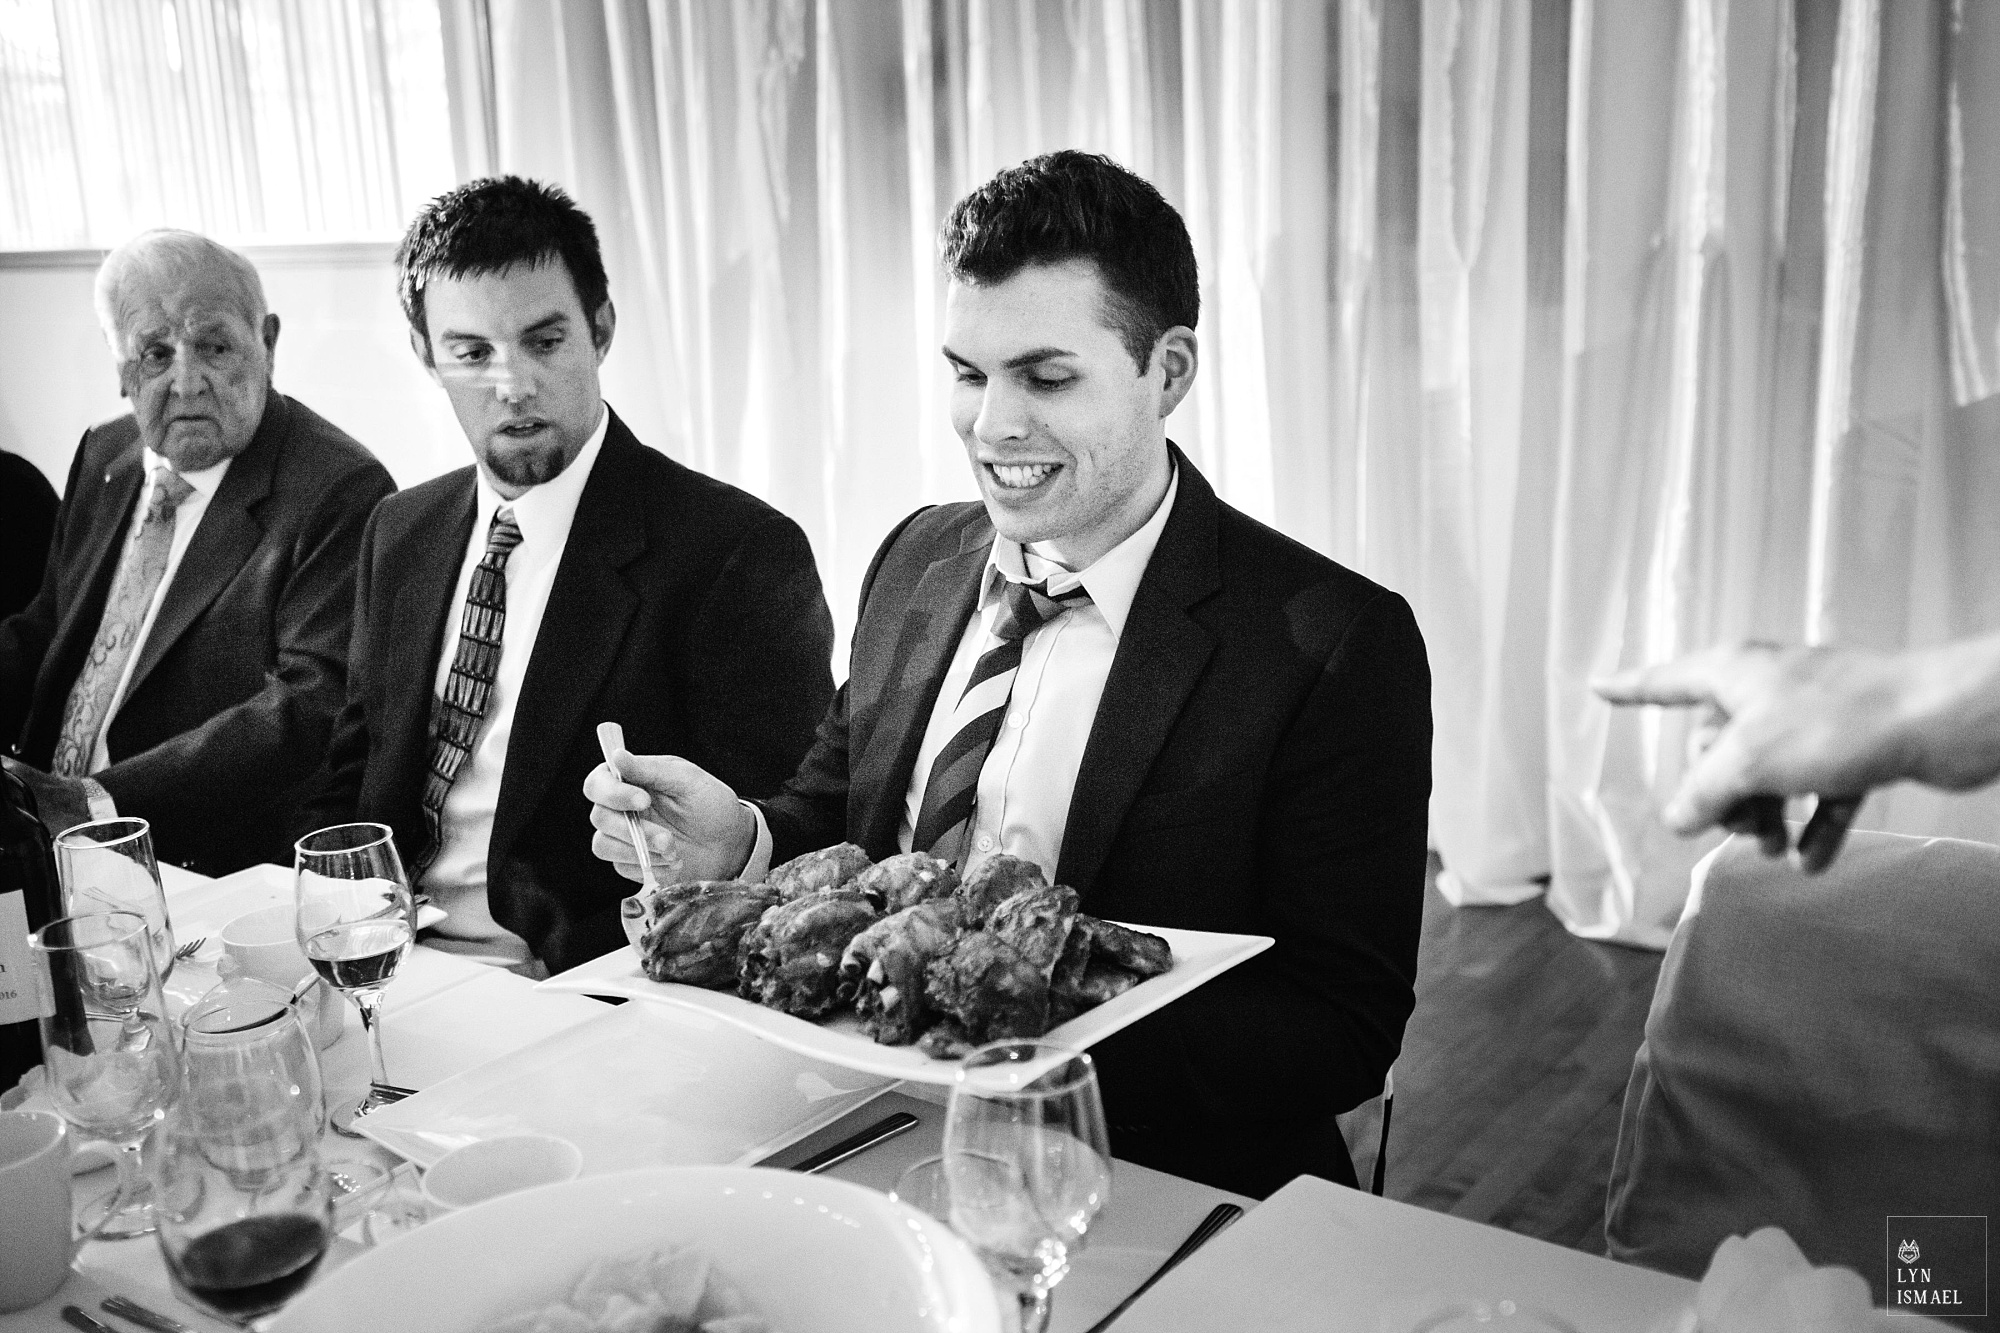 Guests get fed huge portions at a wedding in Wellesley, Ontario.